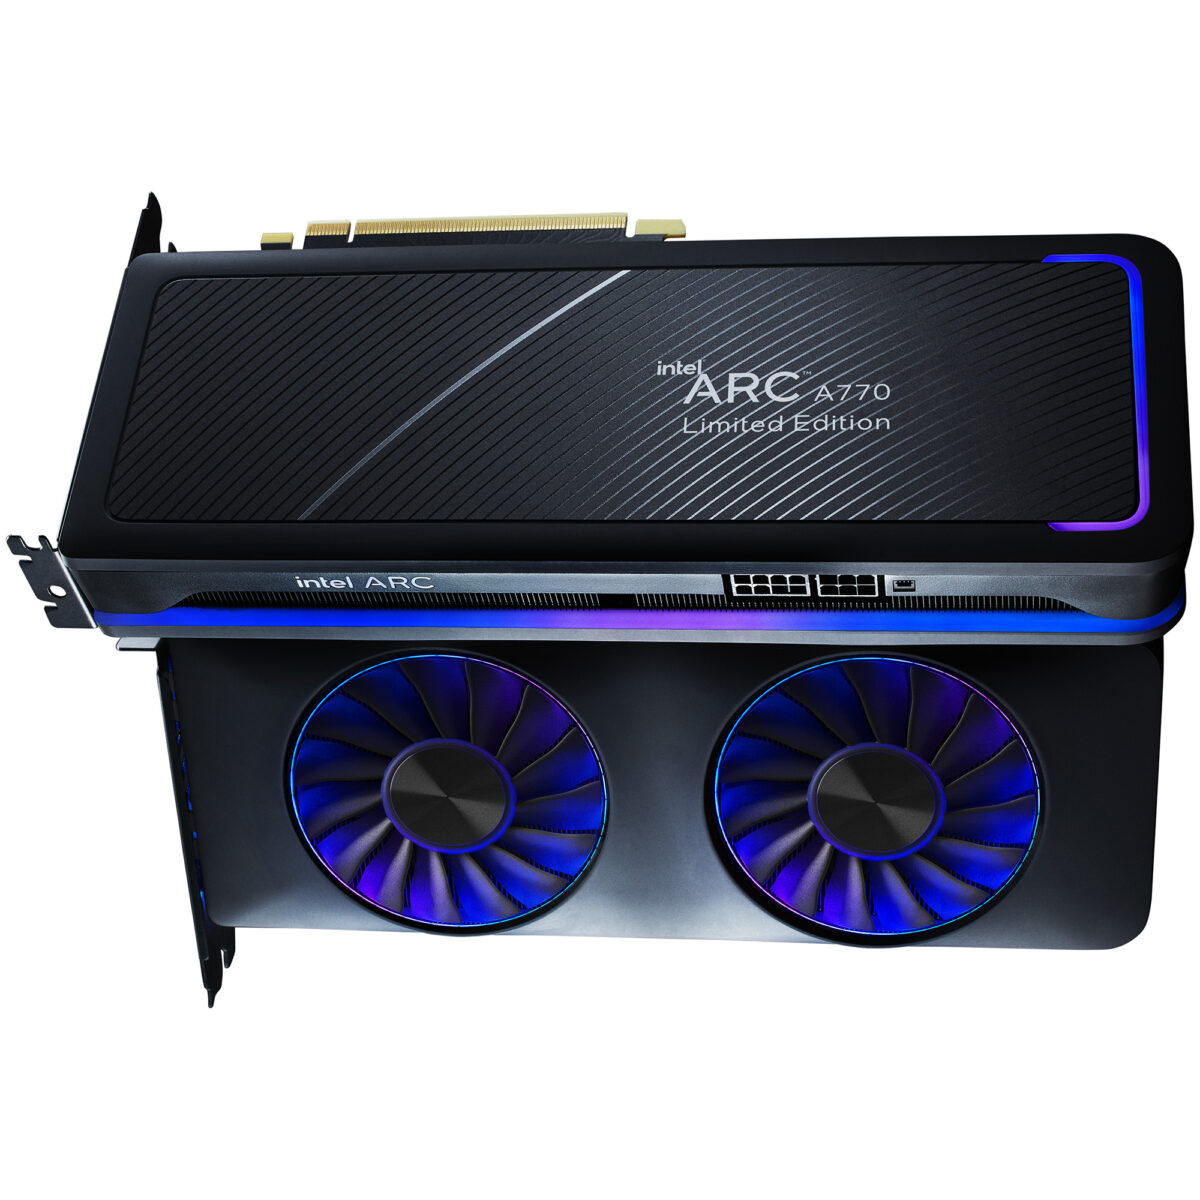 A Creative Arc By Intel: A750 & A770 GPU Workstation Performance 